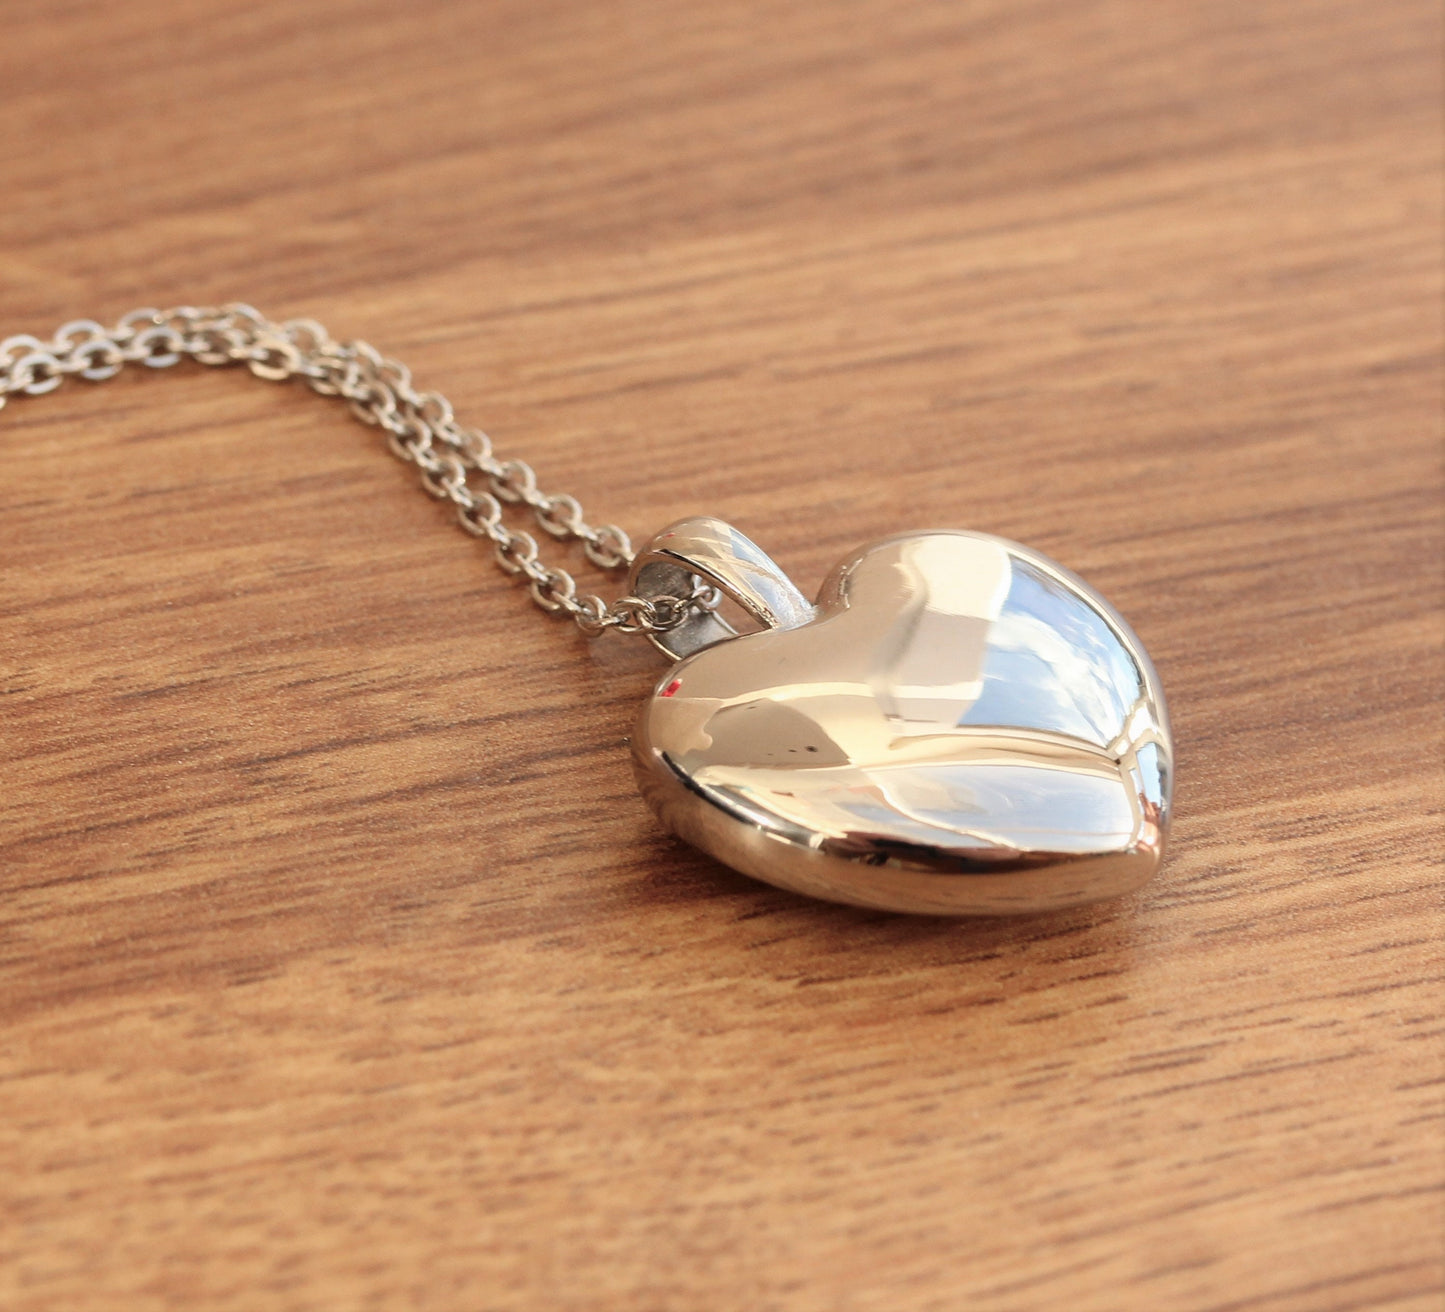 Pure Titanium heart shape pendant with titanium necklace